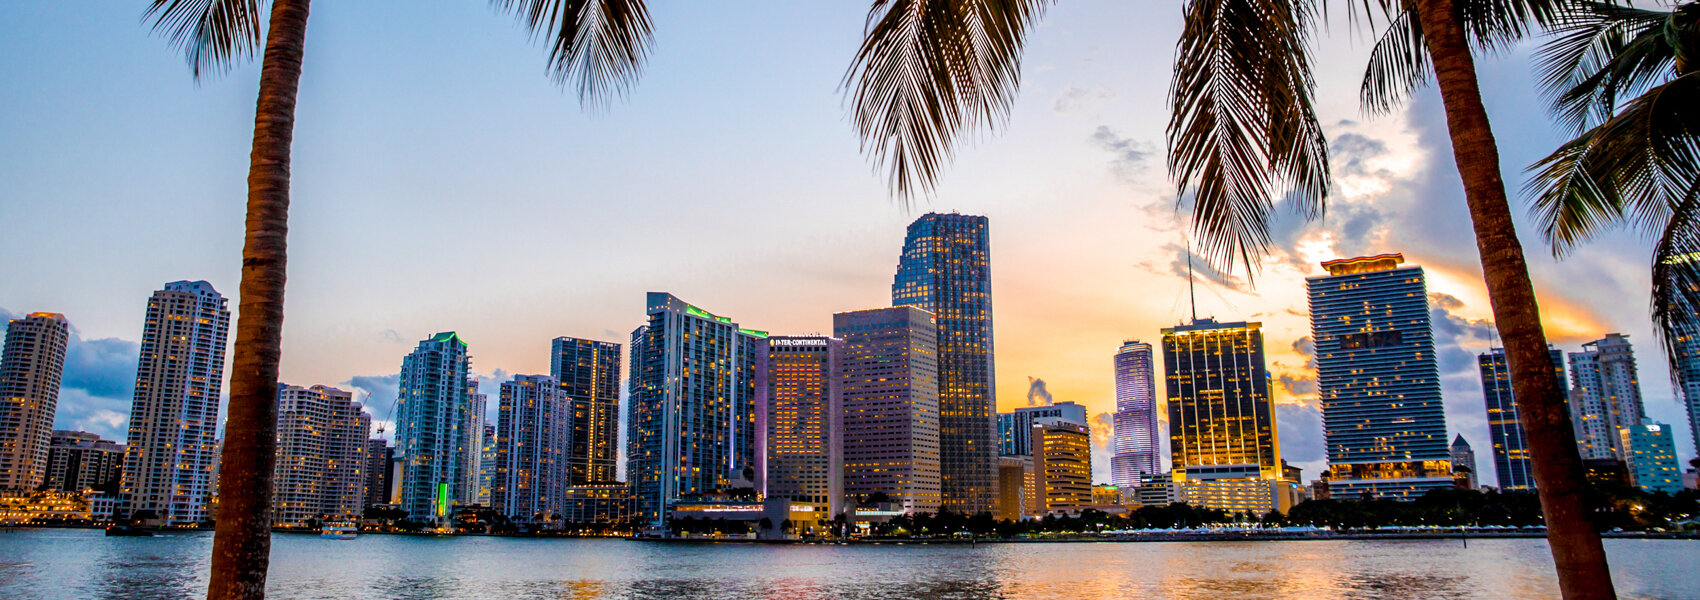 Skyline sur Miami